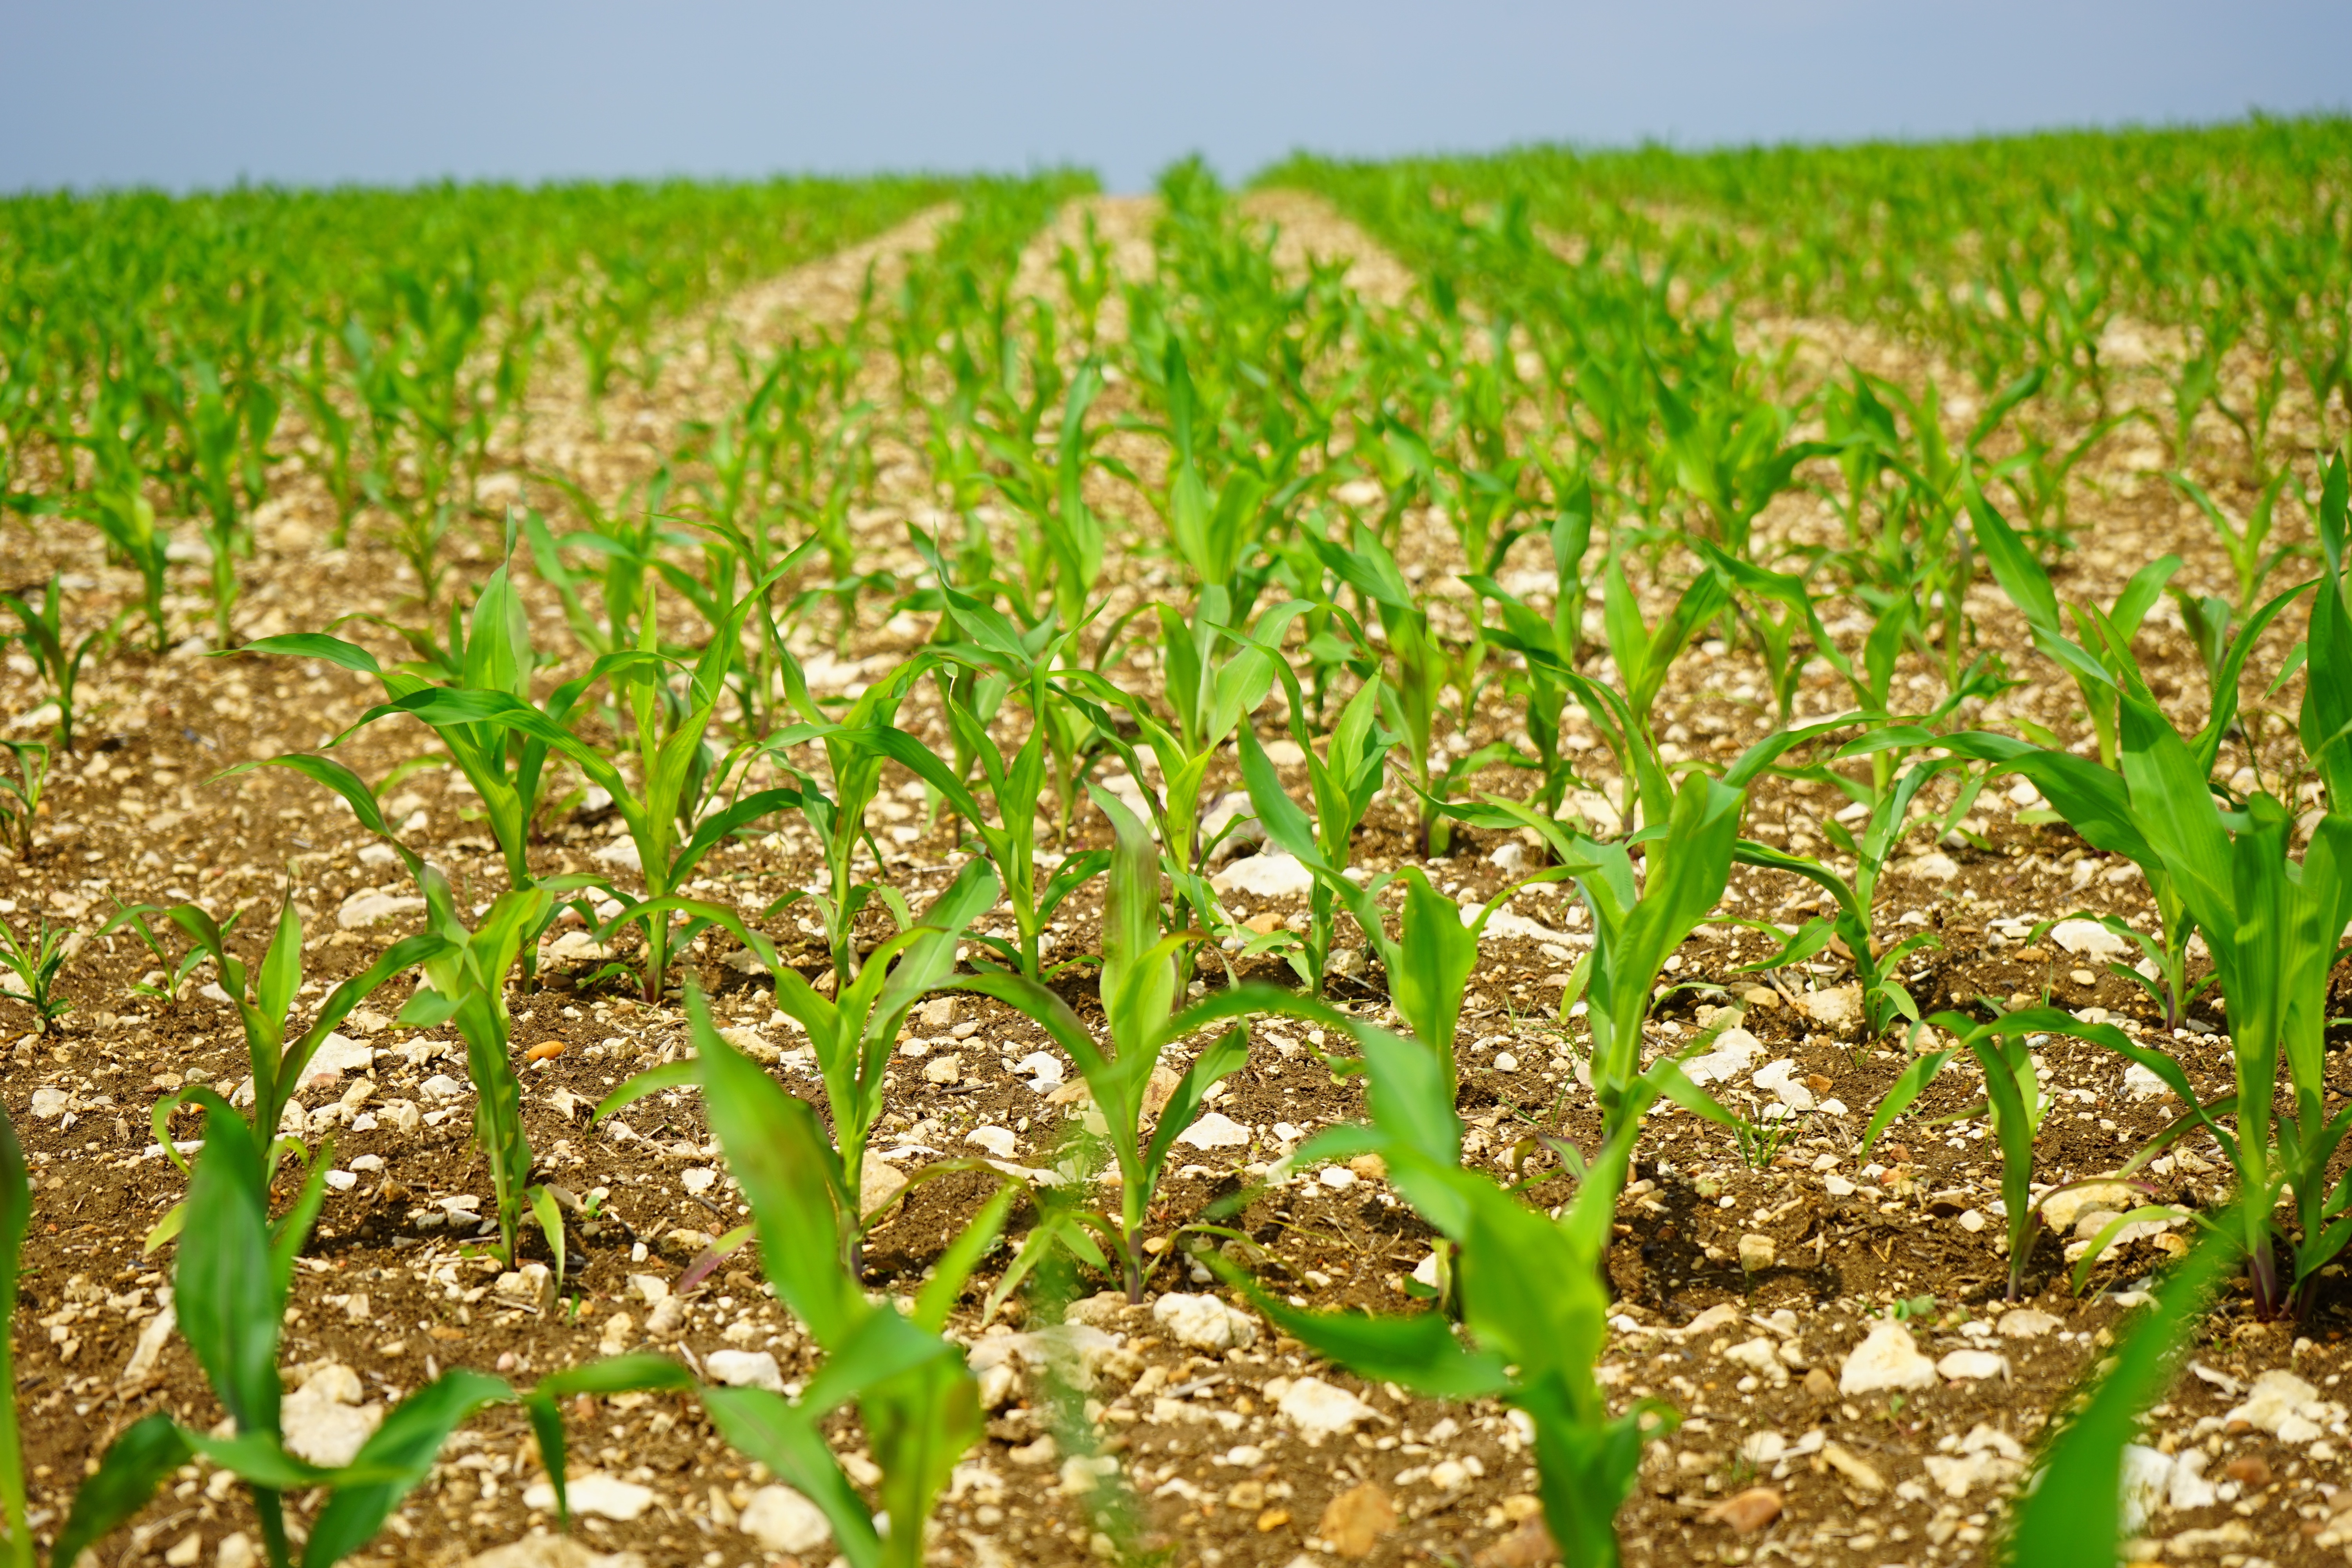 Cornfield, Corn, Field, Arable, agriculture, growth